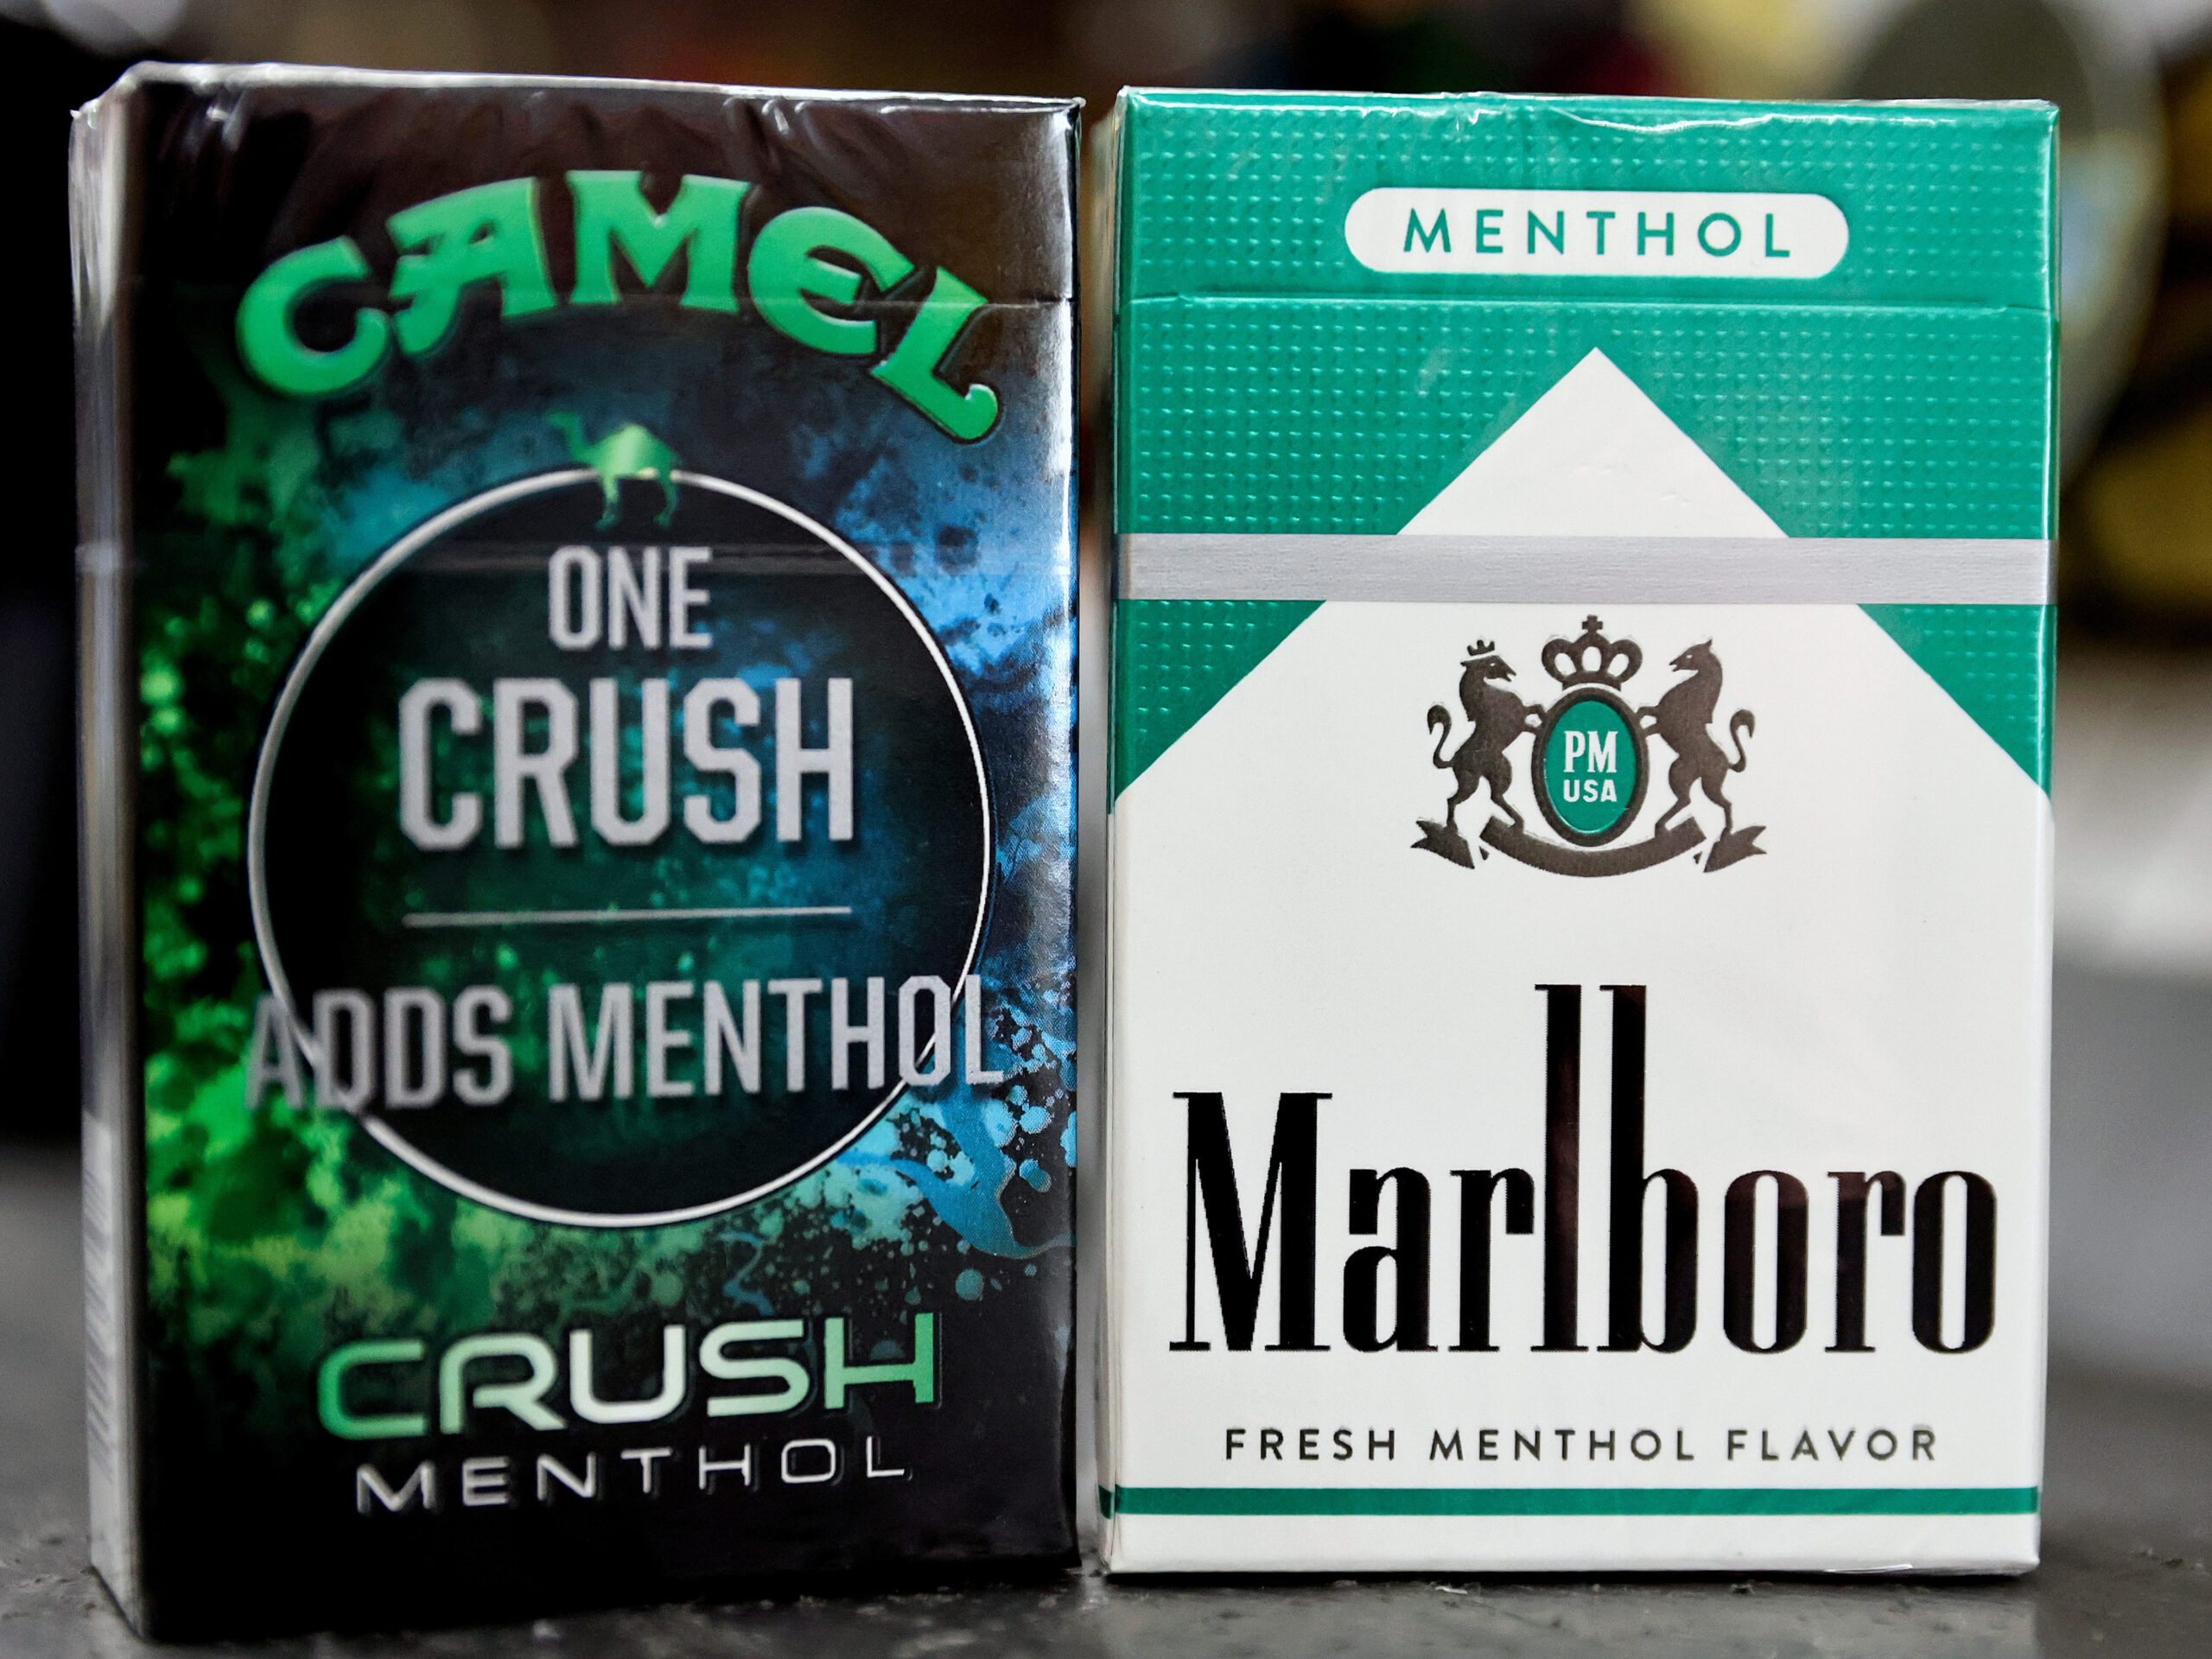 Biden administration abandons plan to ban menthol cigarettes, citing ‘feedback’